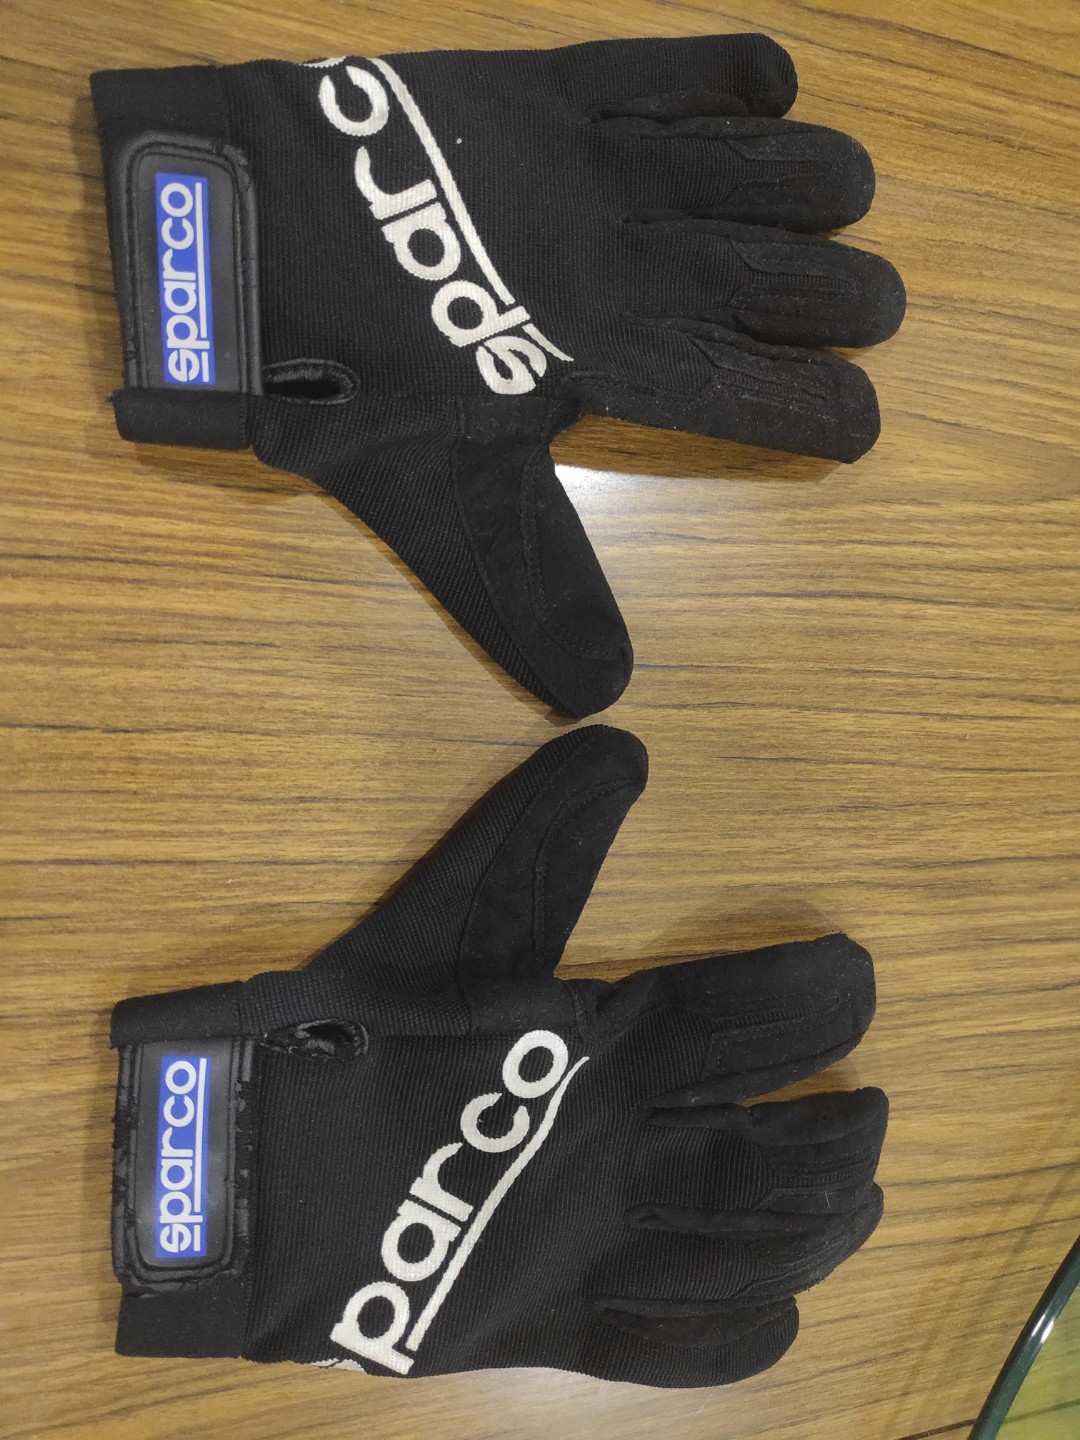 Sparco Meca-3 Mechanics Gloves